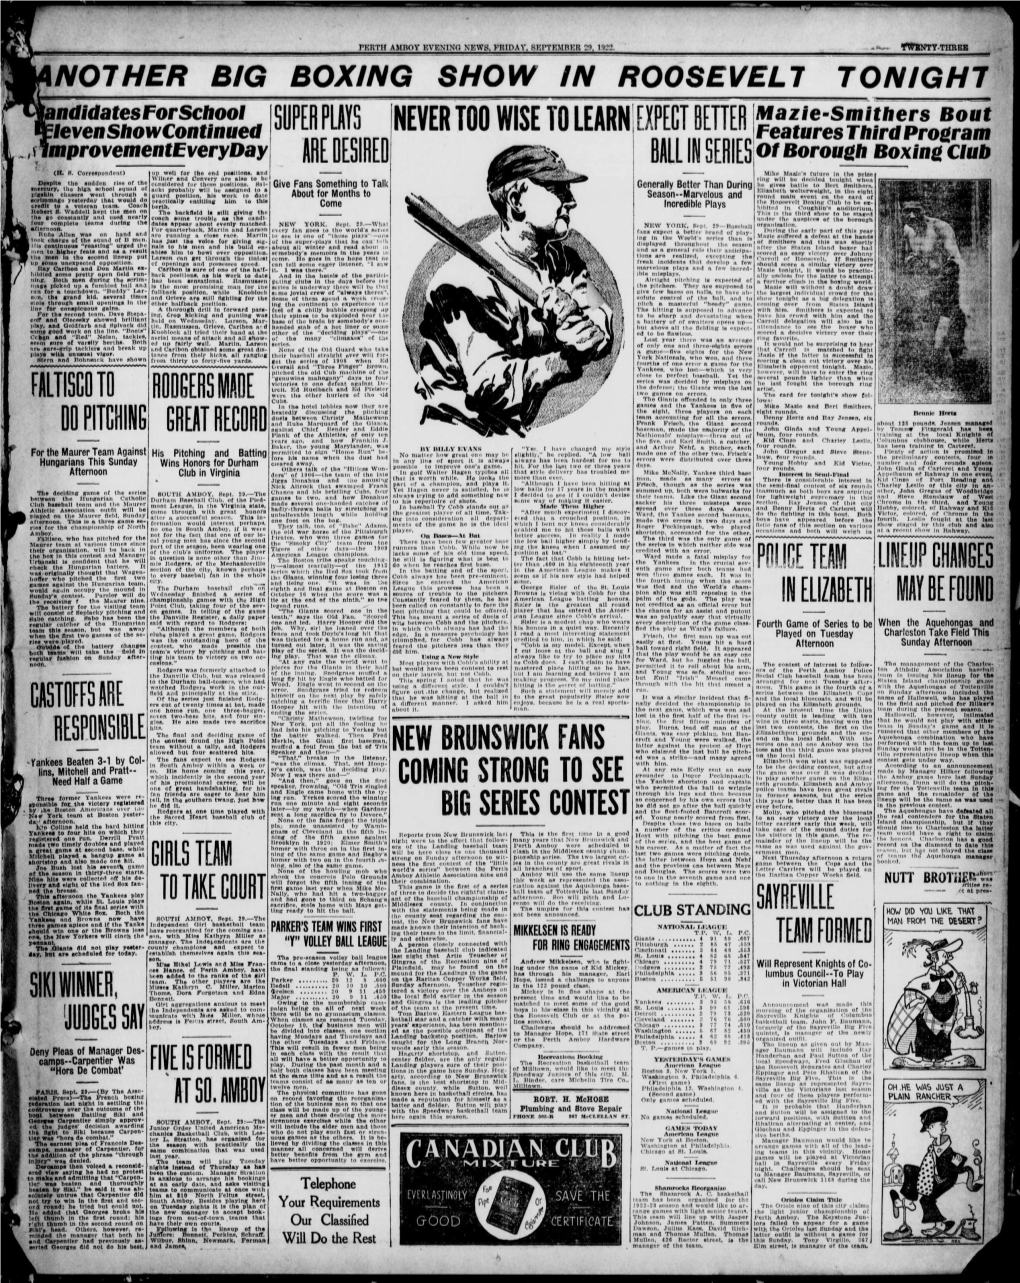 Perth Amboy Evening News (Perth Amboy, N.J.). 1922-09-29 [P 23]